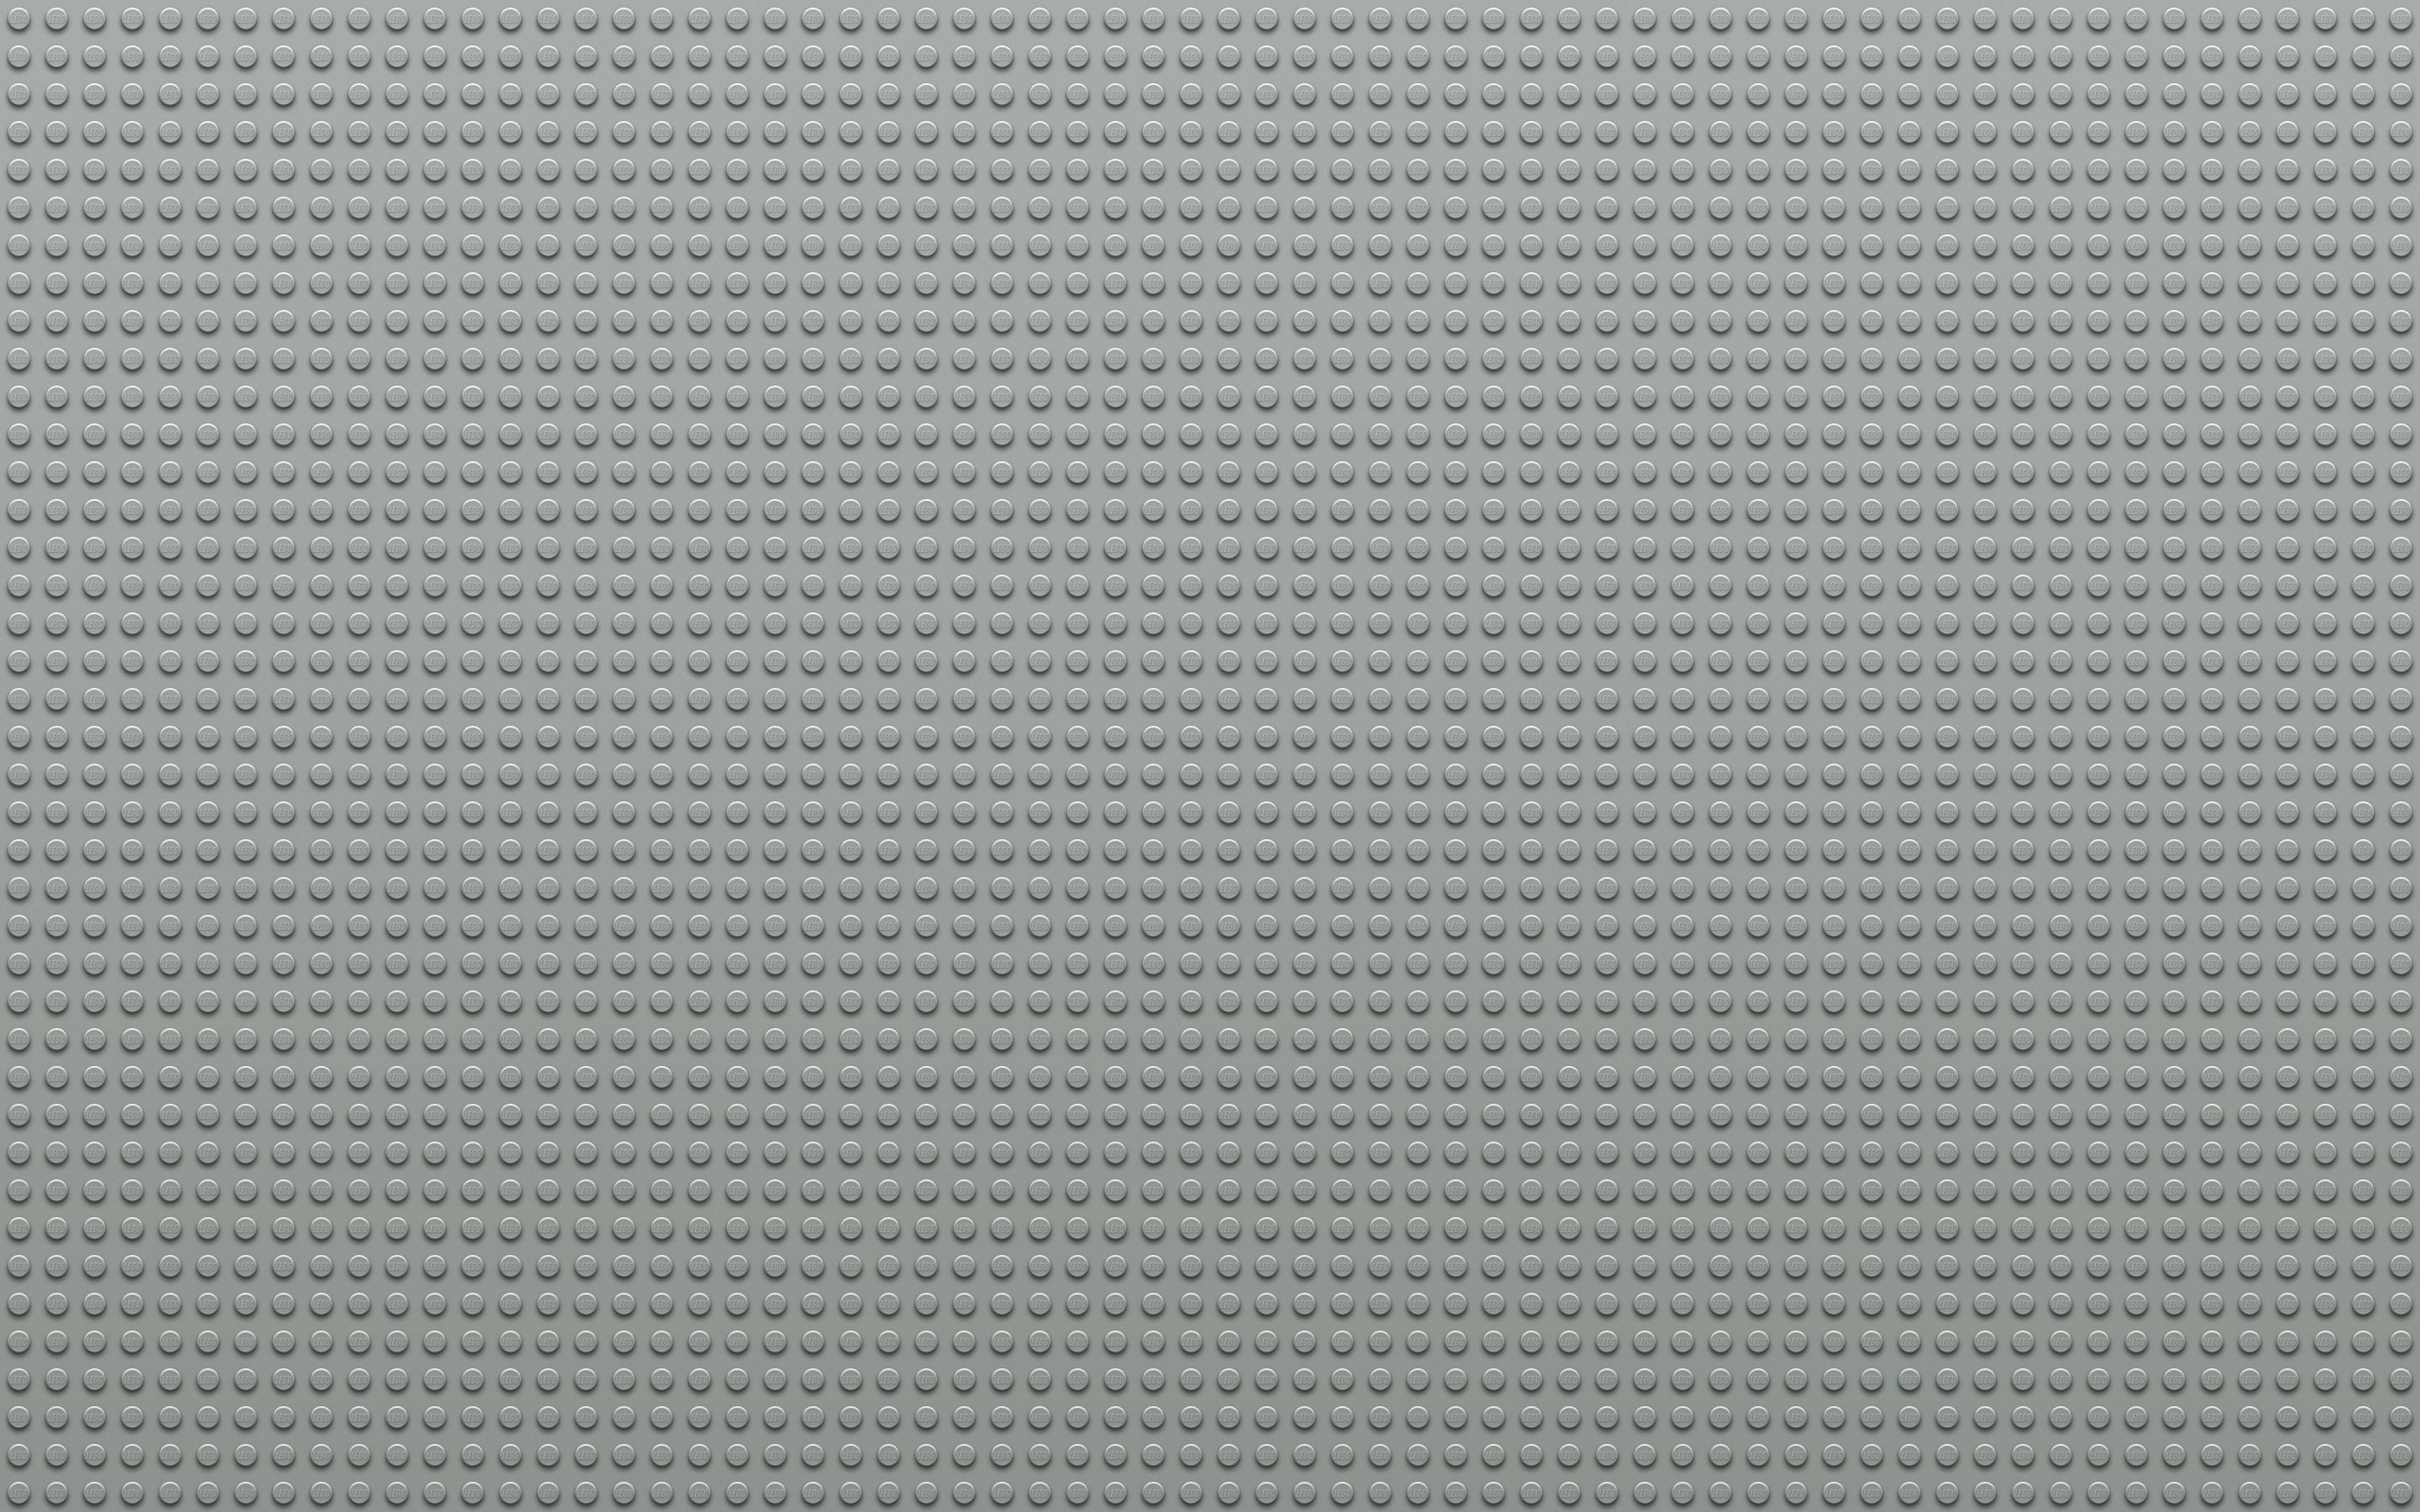 Lego Points Circles Light Gray Background